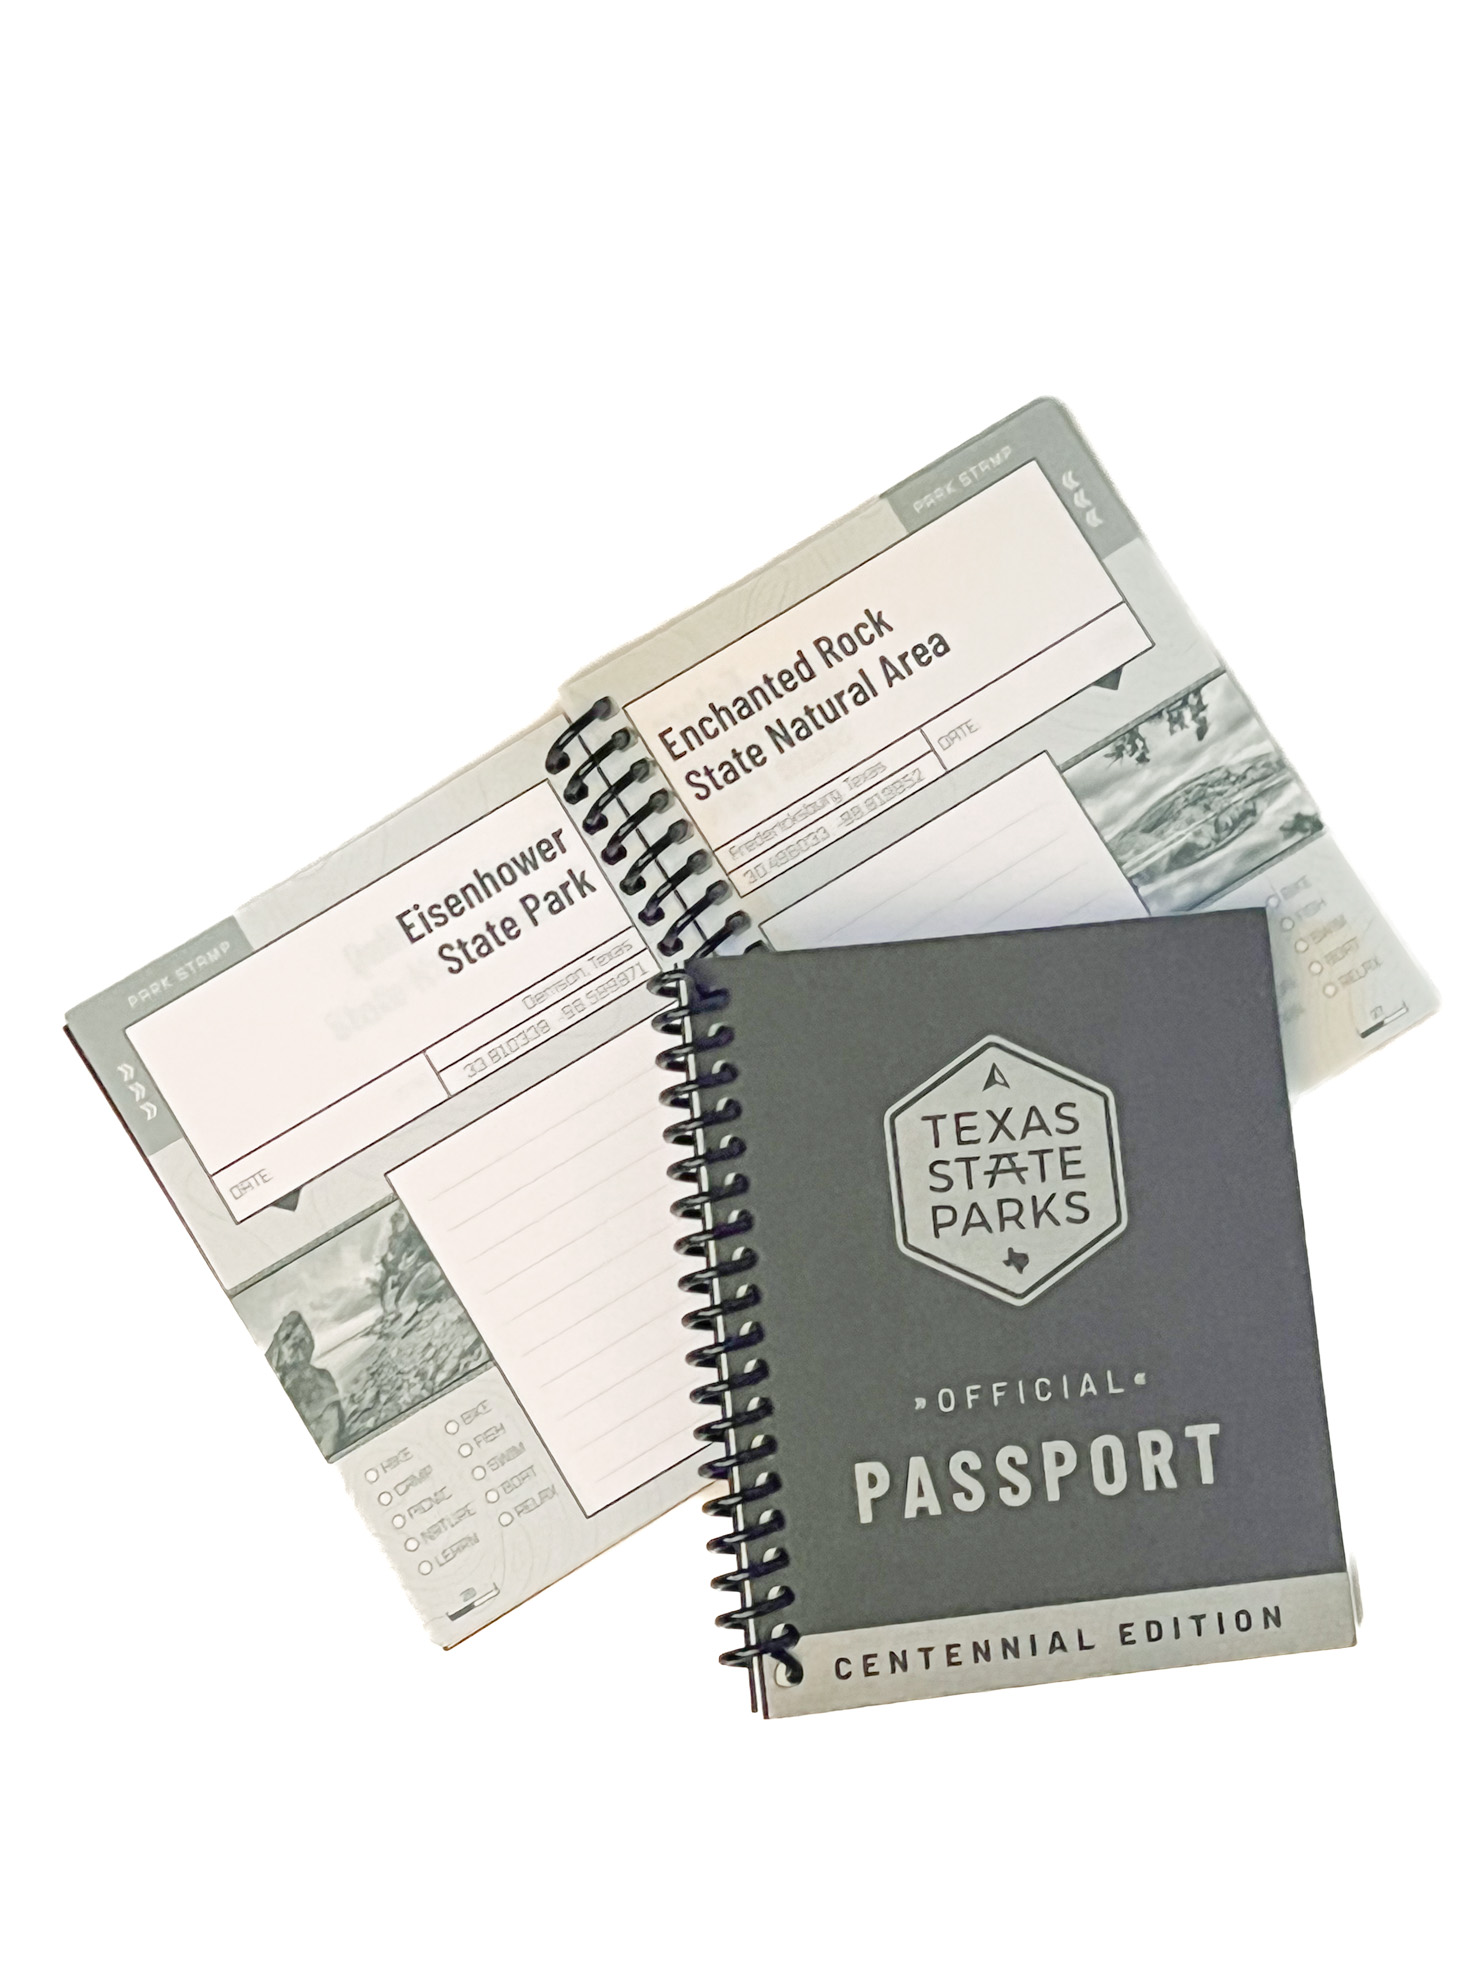 TSP Passport 100 Year Edition-SP100Merchandise_Passport_IMG_6094